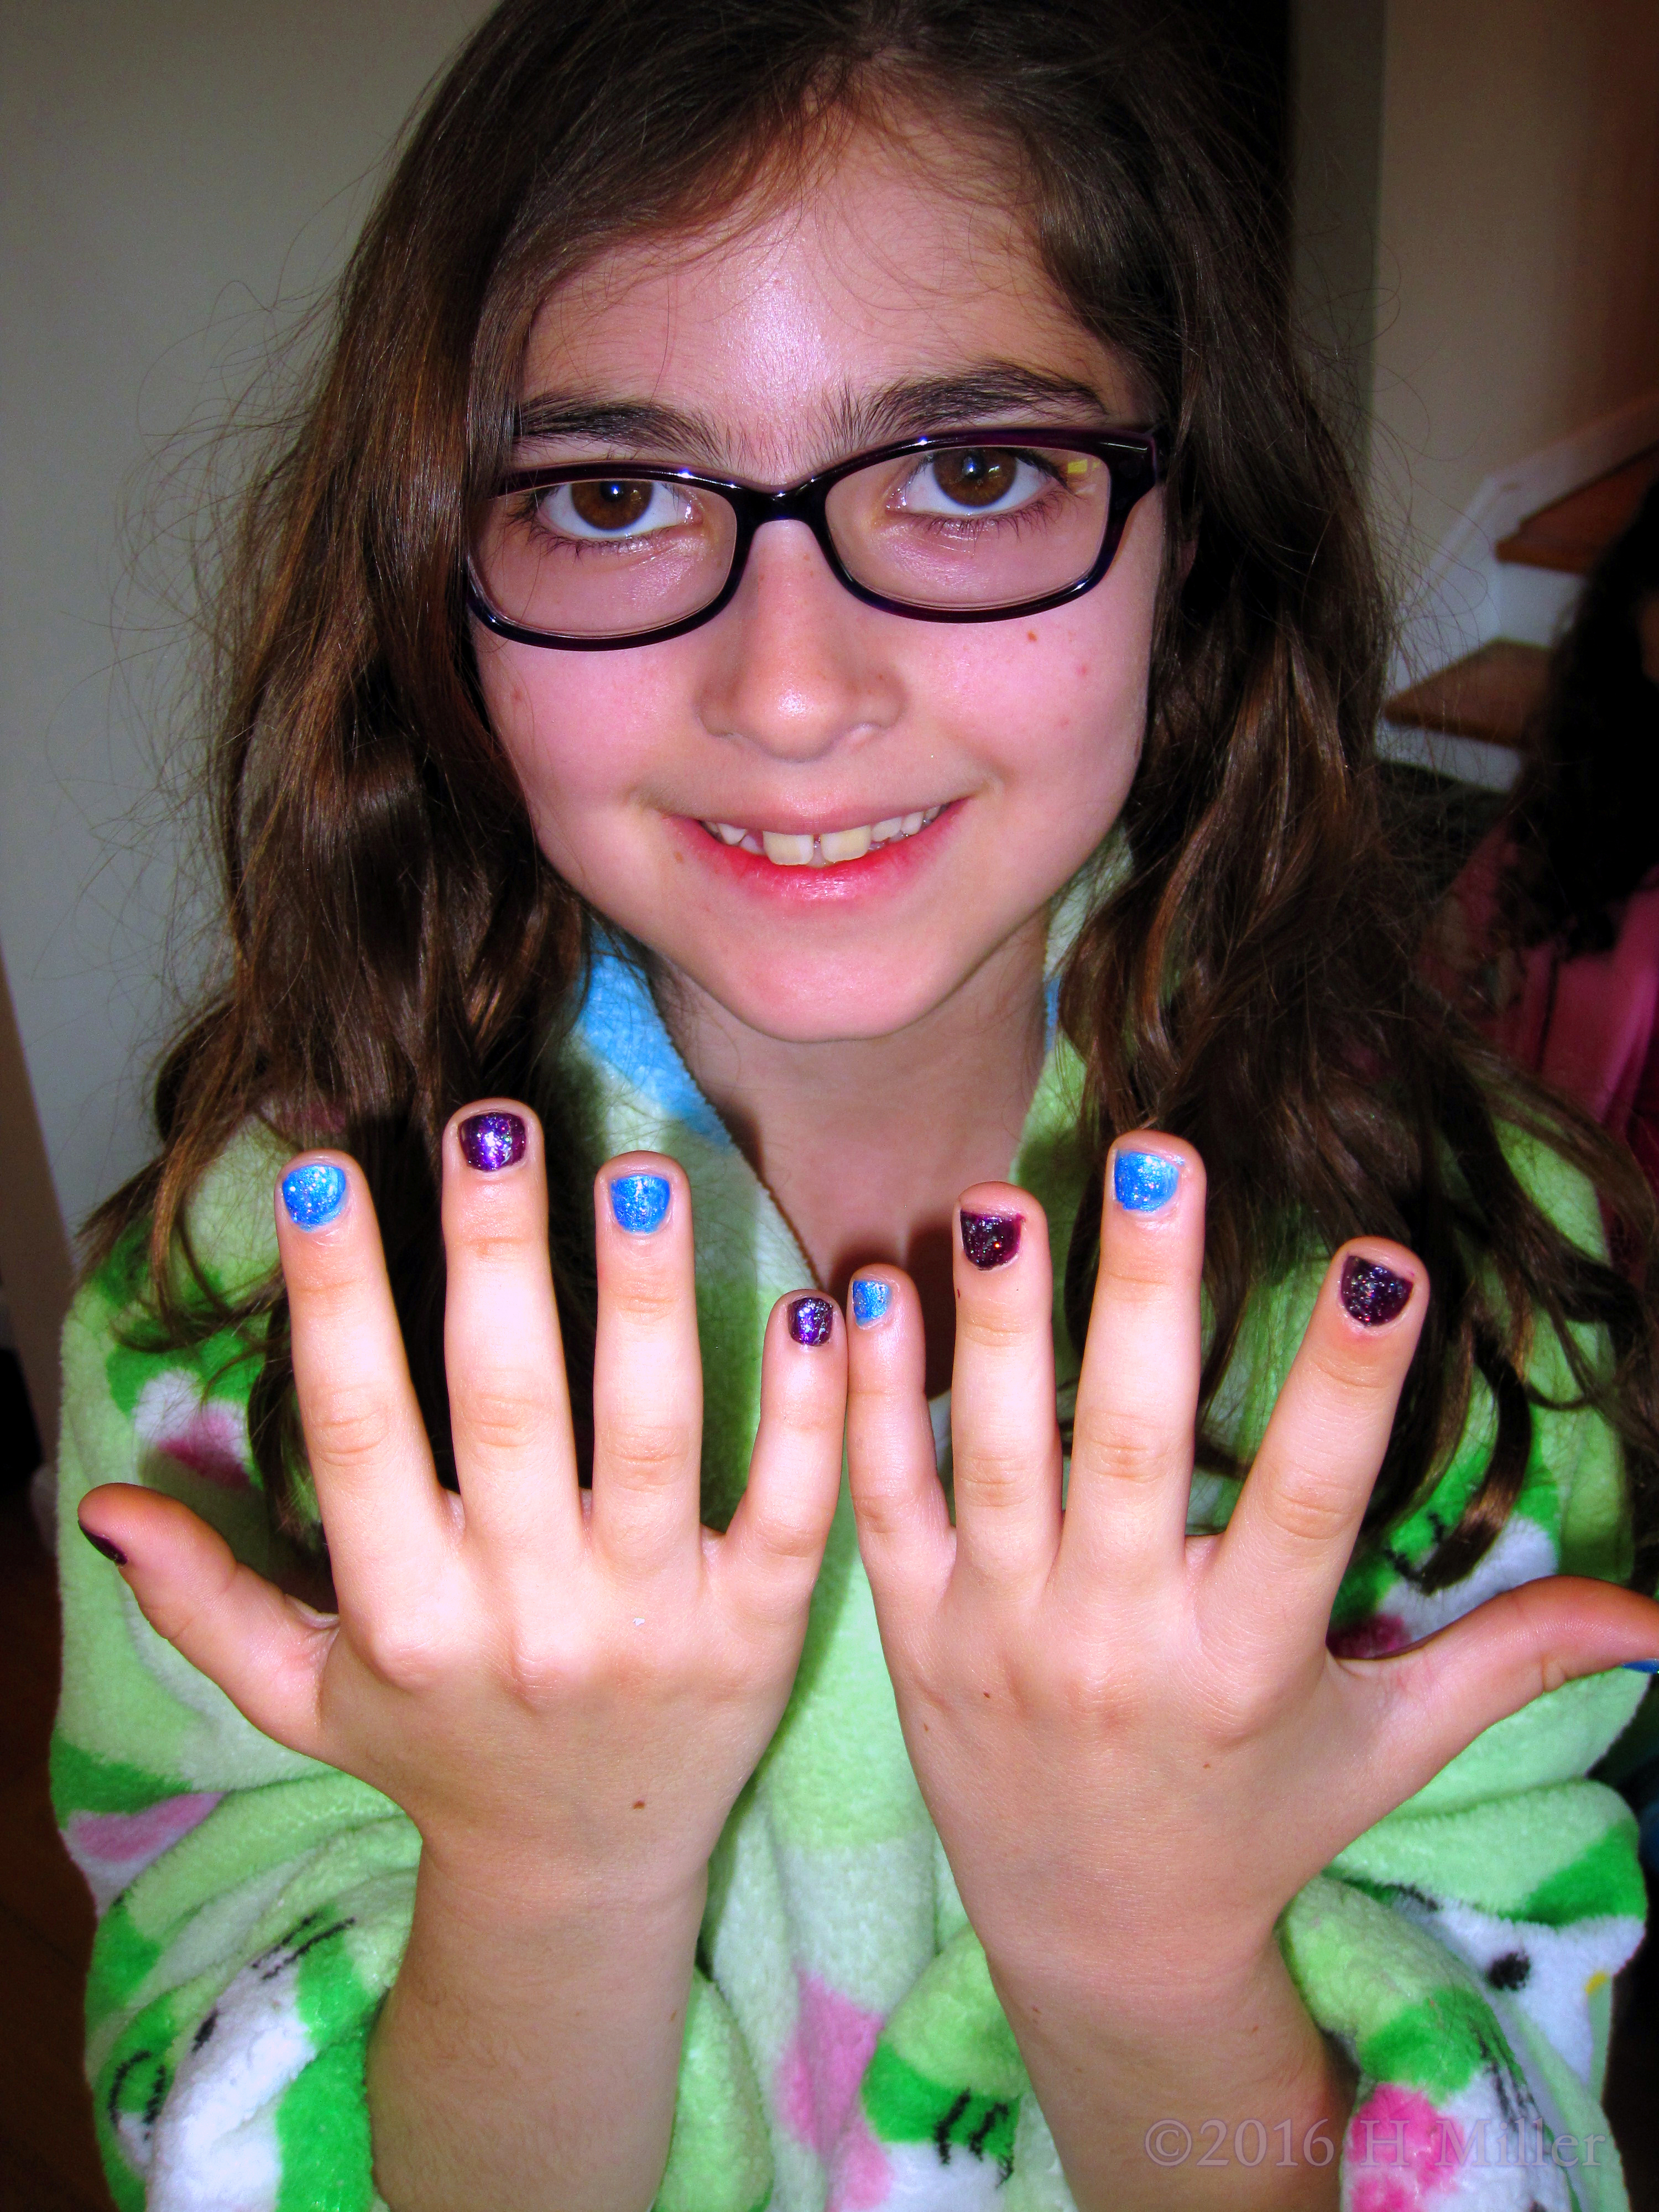 She Loves Her Cute Home Kids Spa Manicure